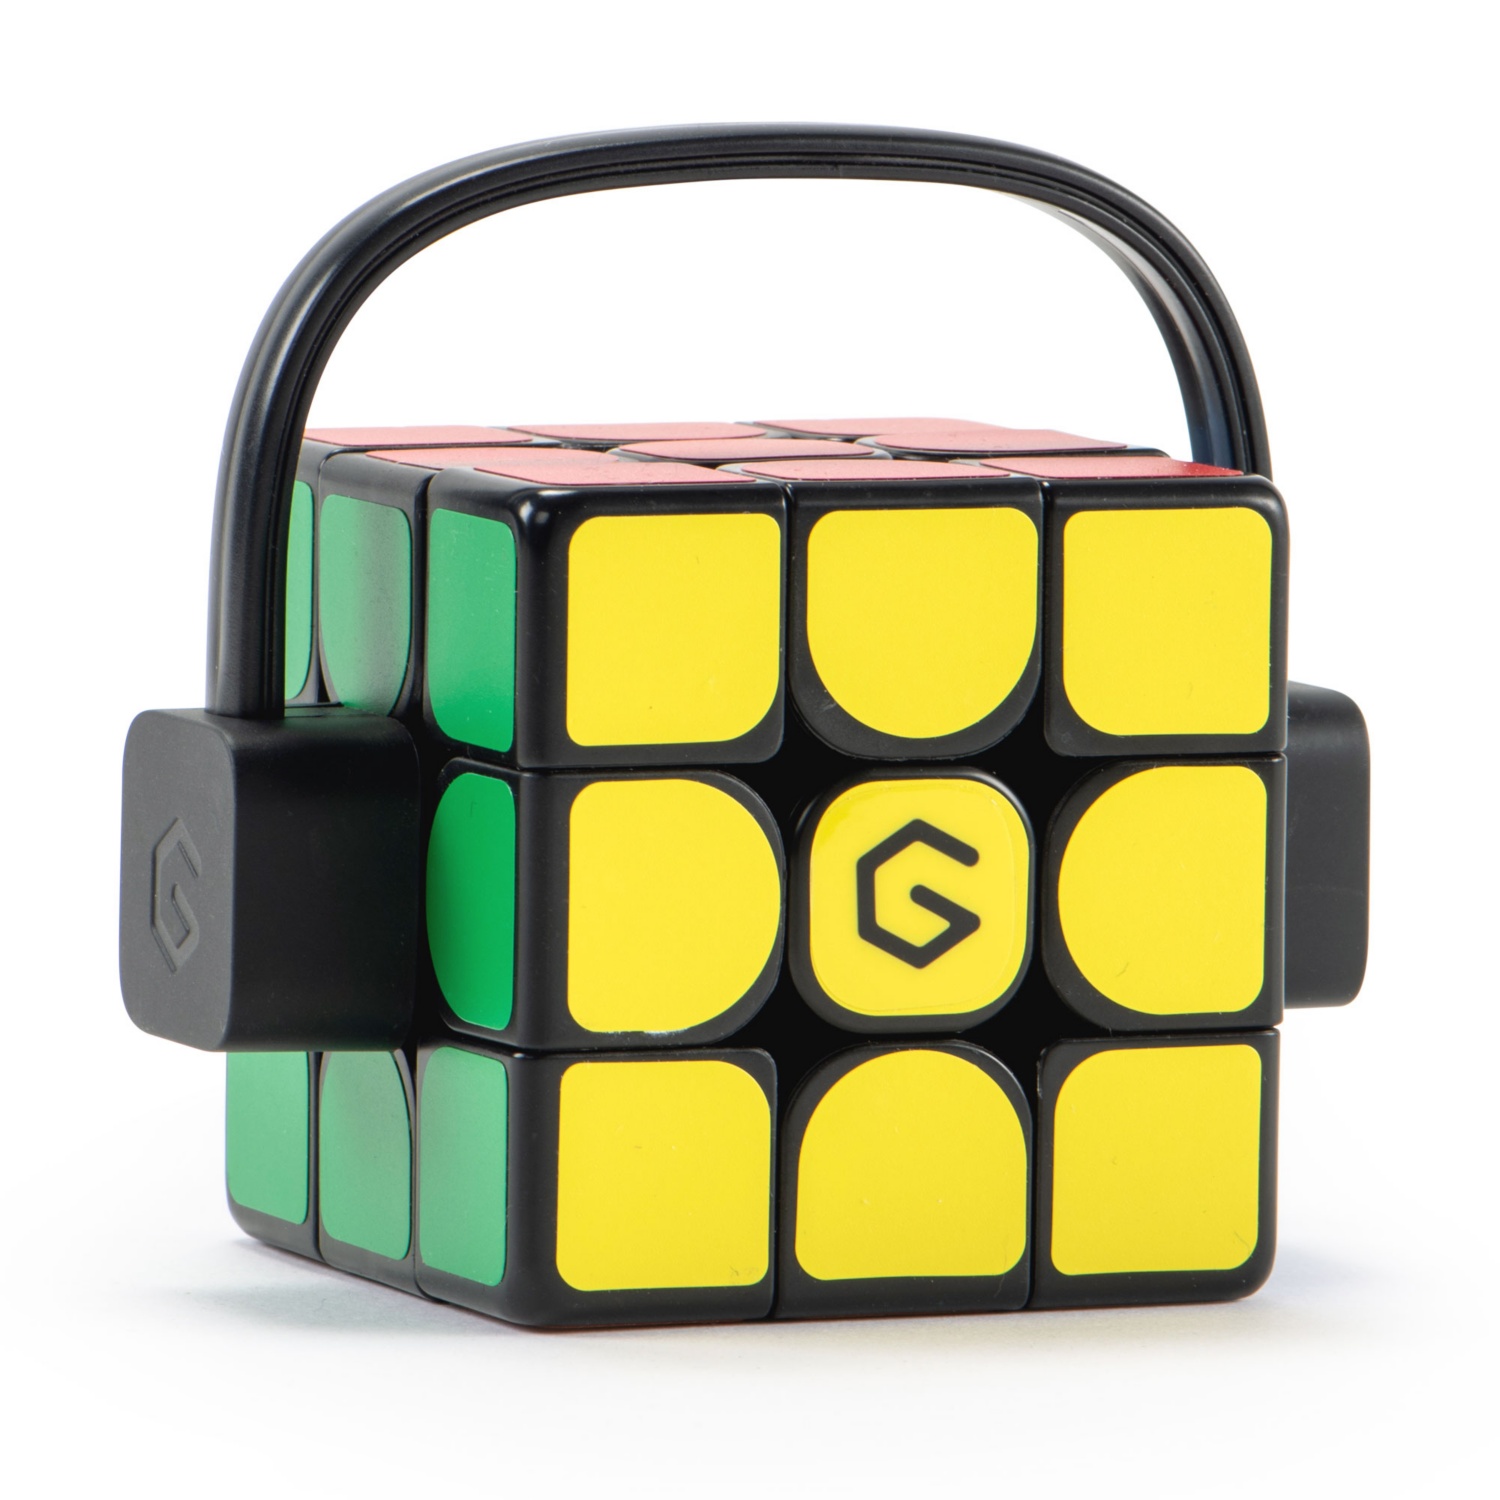 GIIKER Supercube Cube intelligent